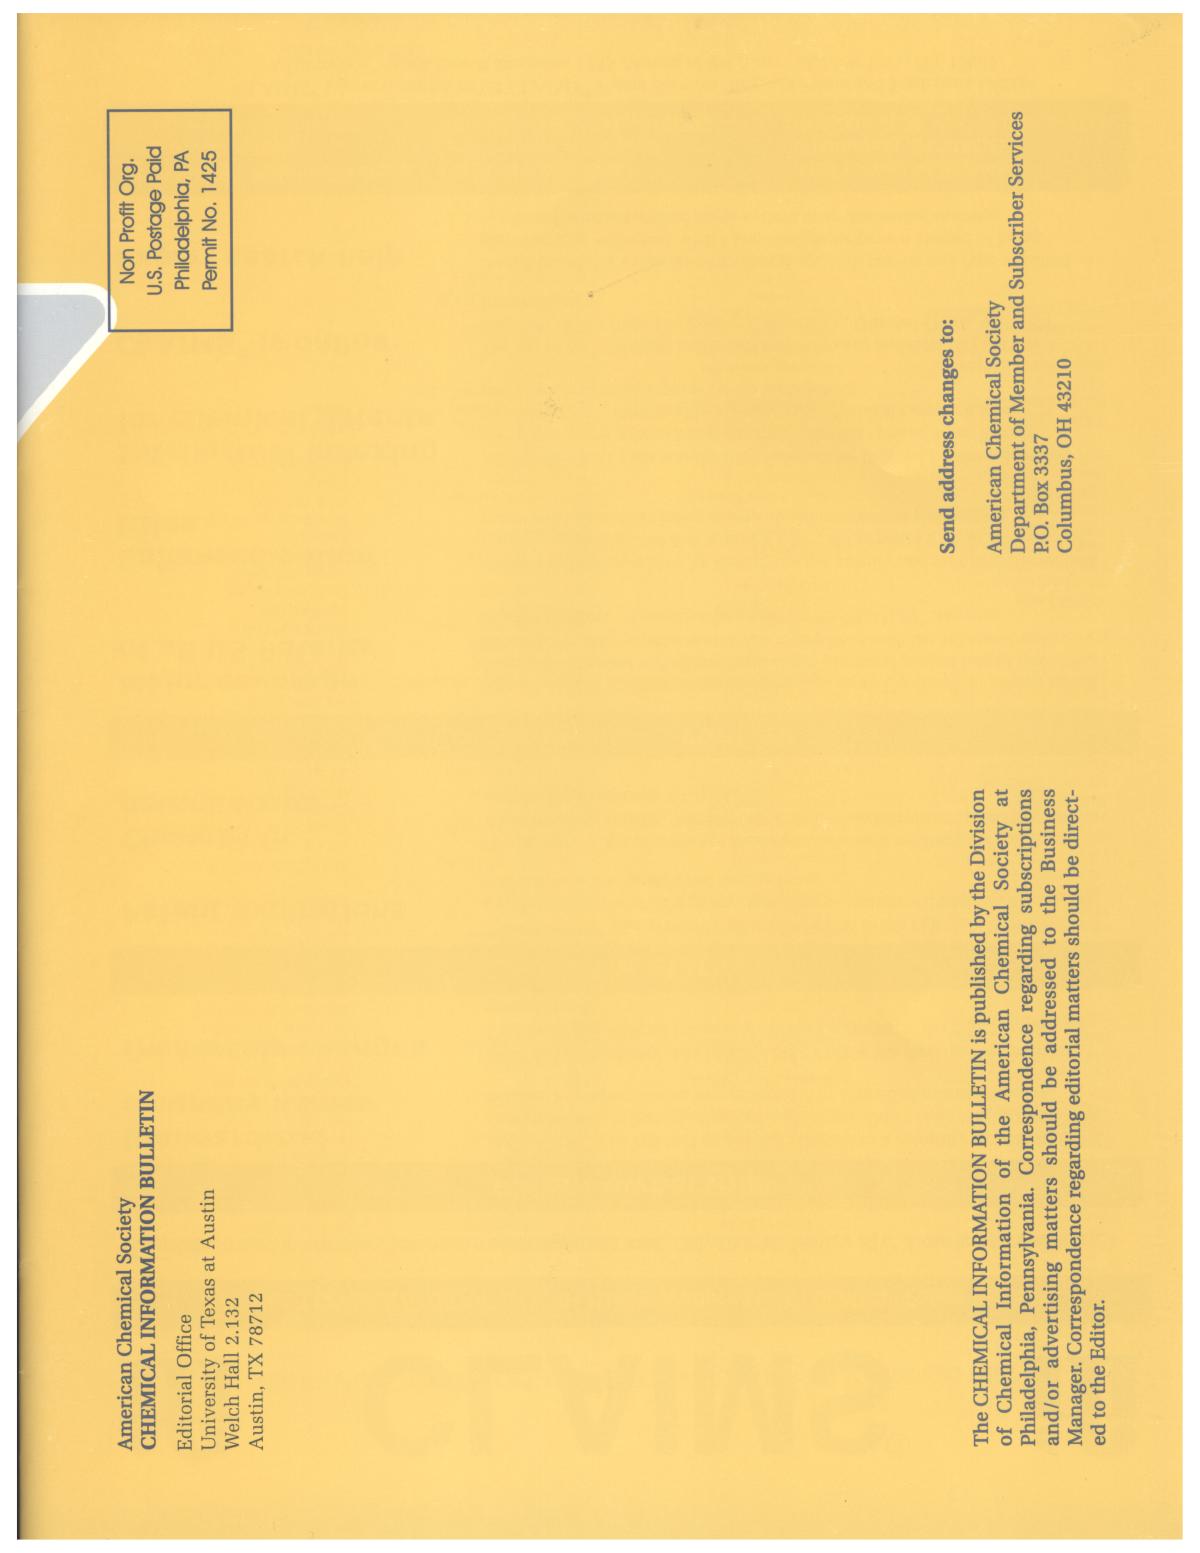 Chemical Information Bulletin, Volume 52, Number 1, Spring 2000
                                                
                                                    46
                                                